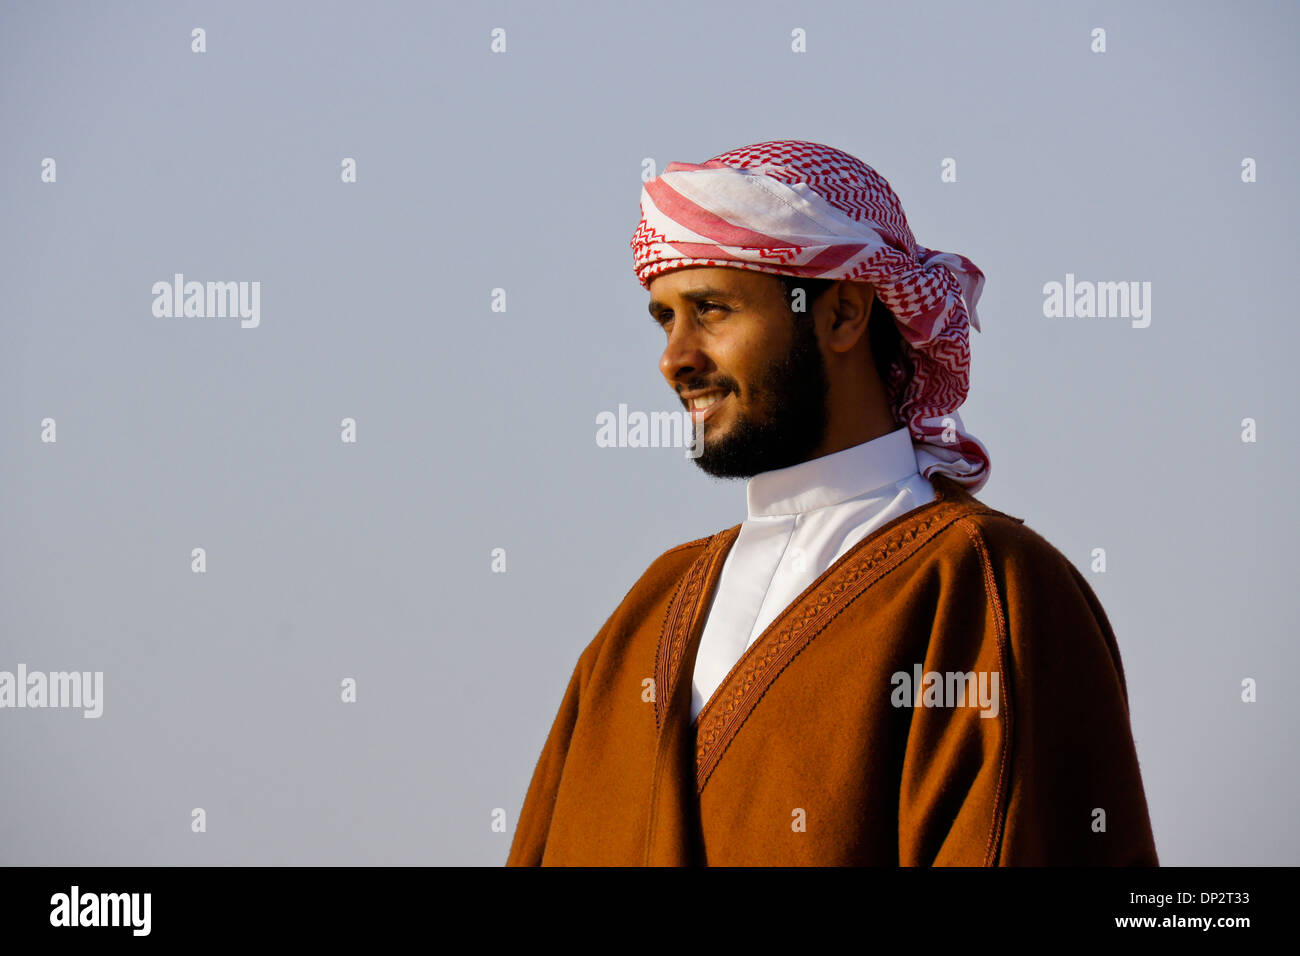 Arab man in traditional dress, Abu Dhabi, UAE Stock Photo